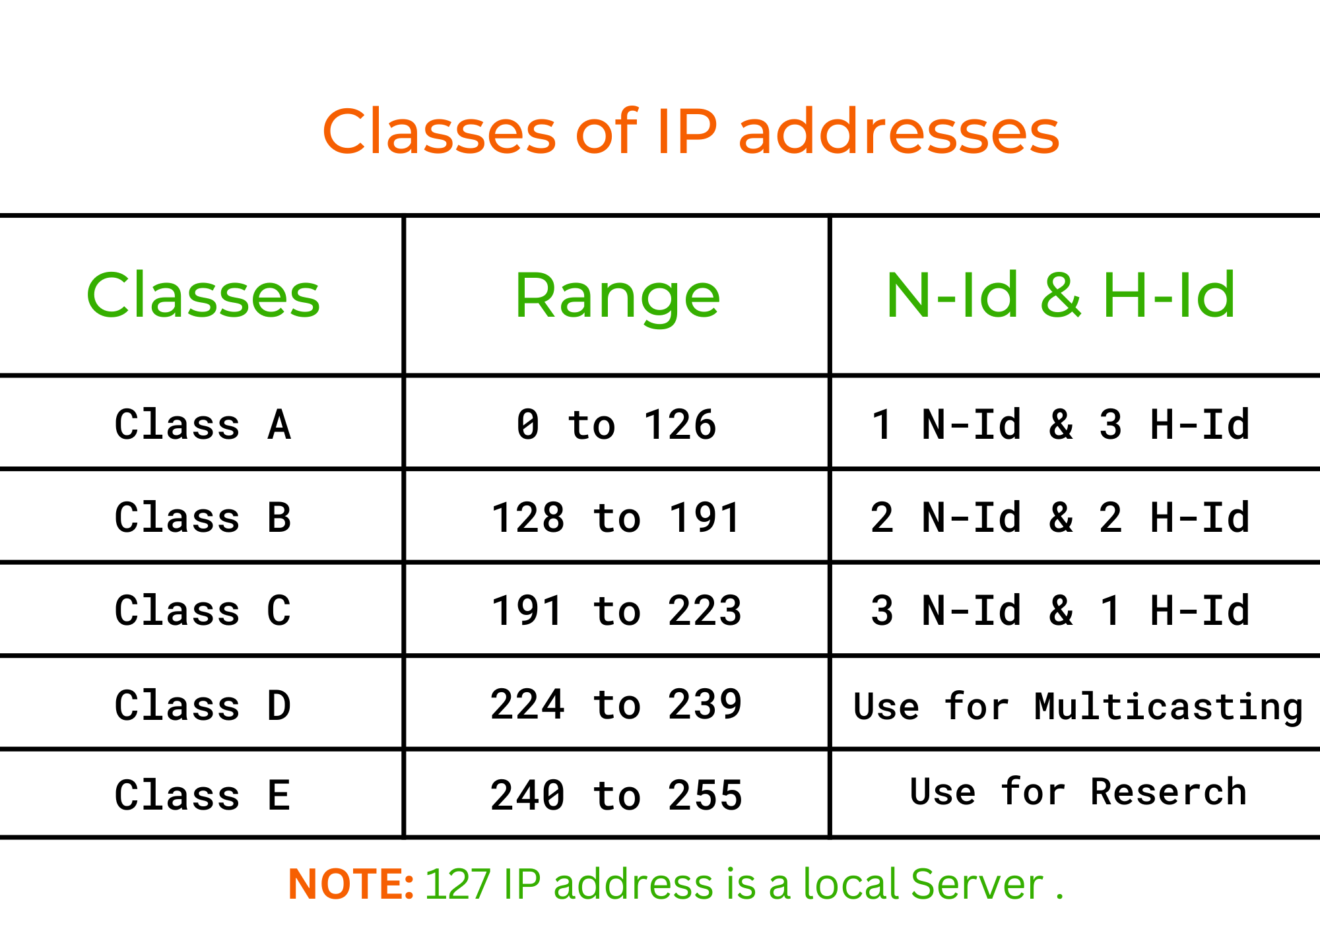 ip address significant bitstamp